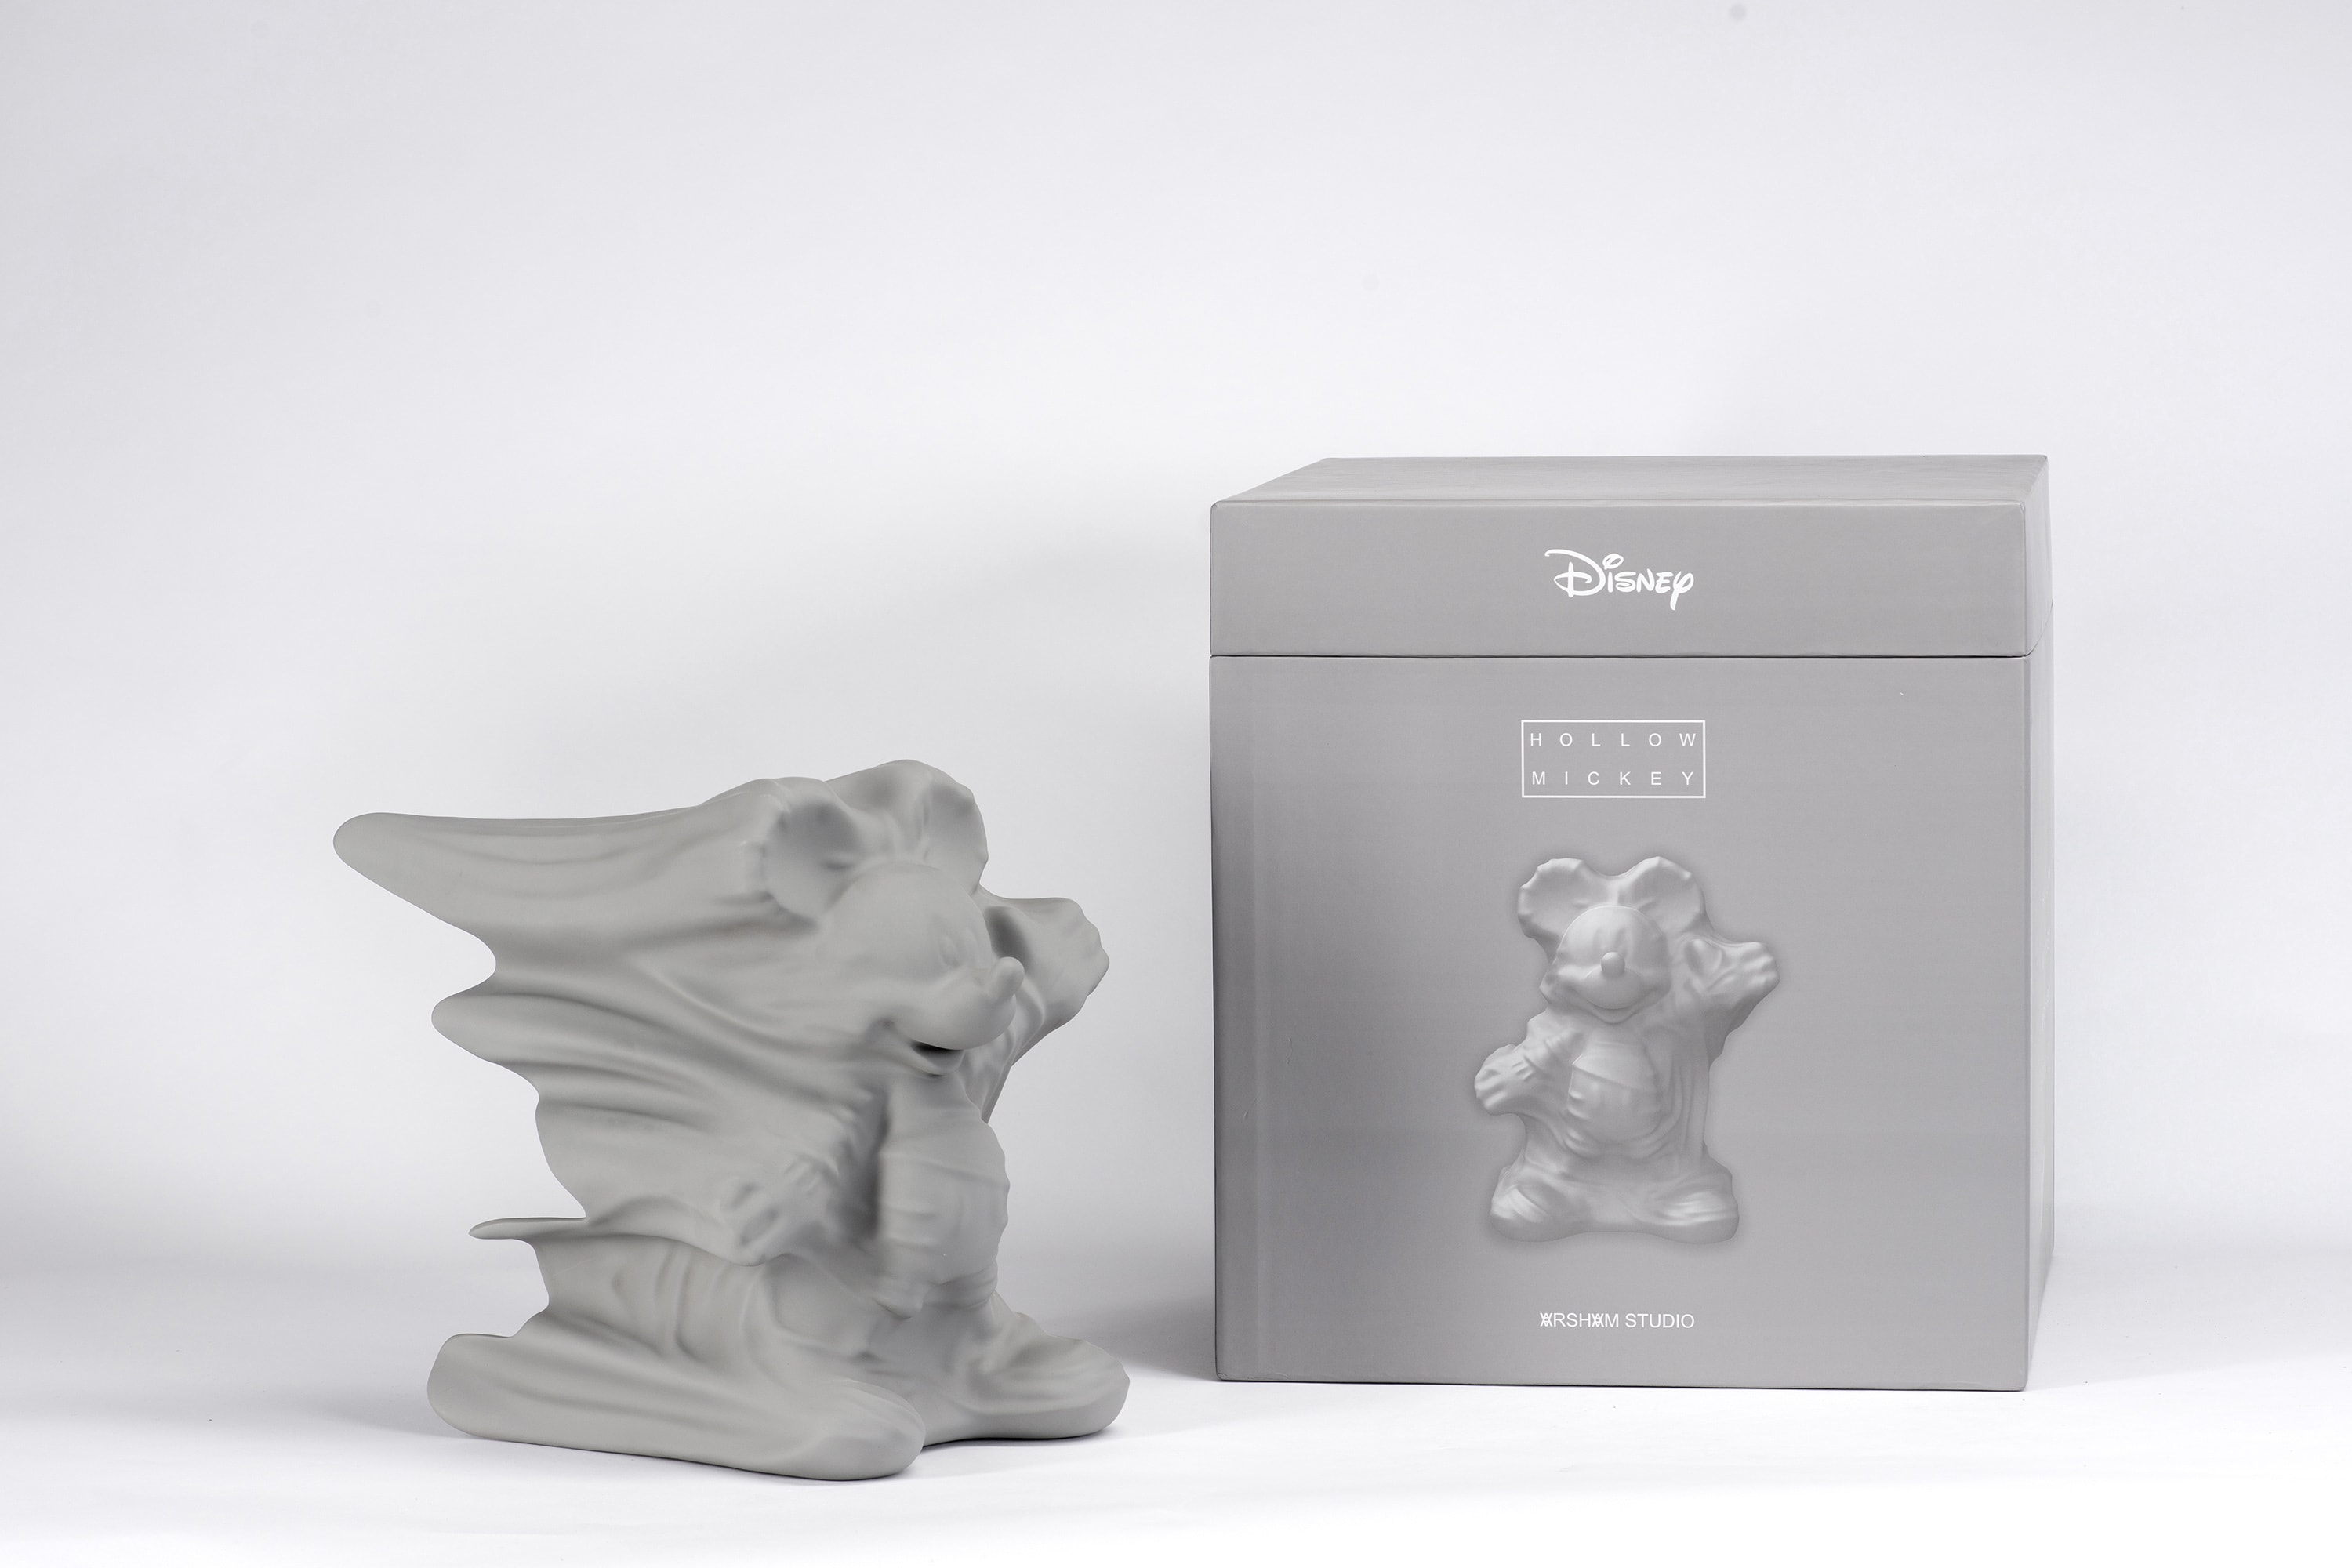 「Disney Collection By Daniel Arsham X Apportfolio」灰色版即将发售